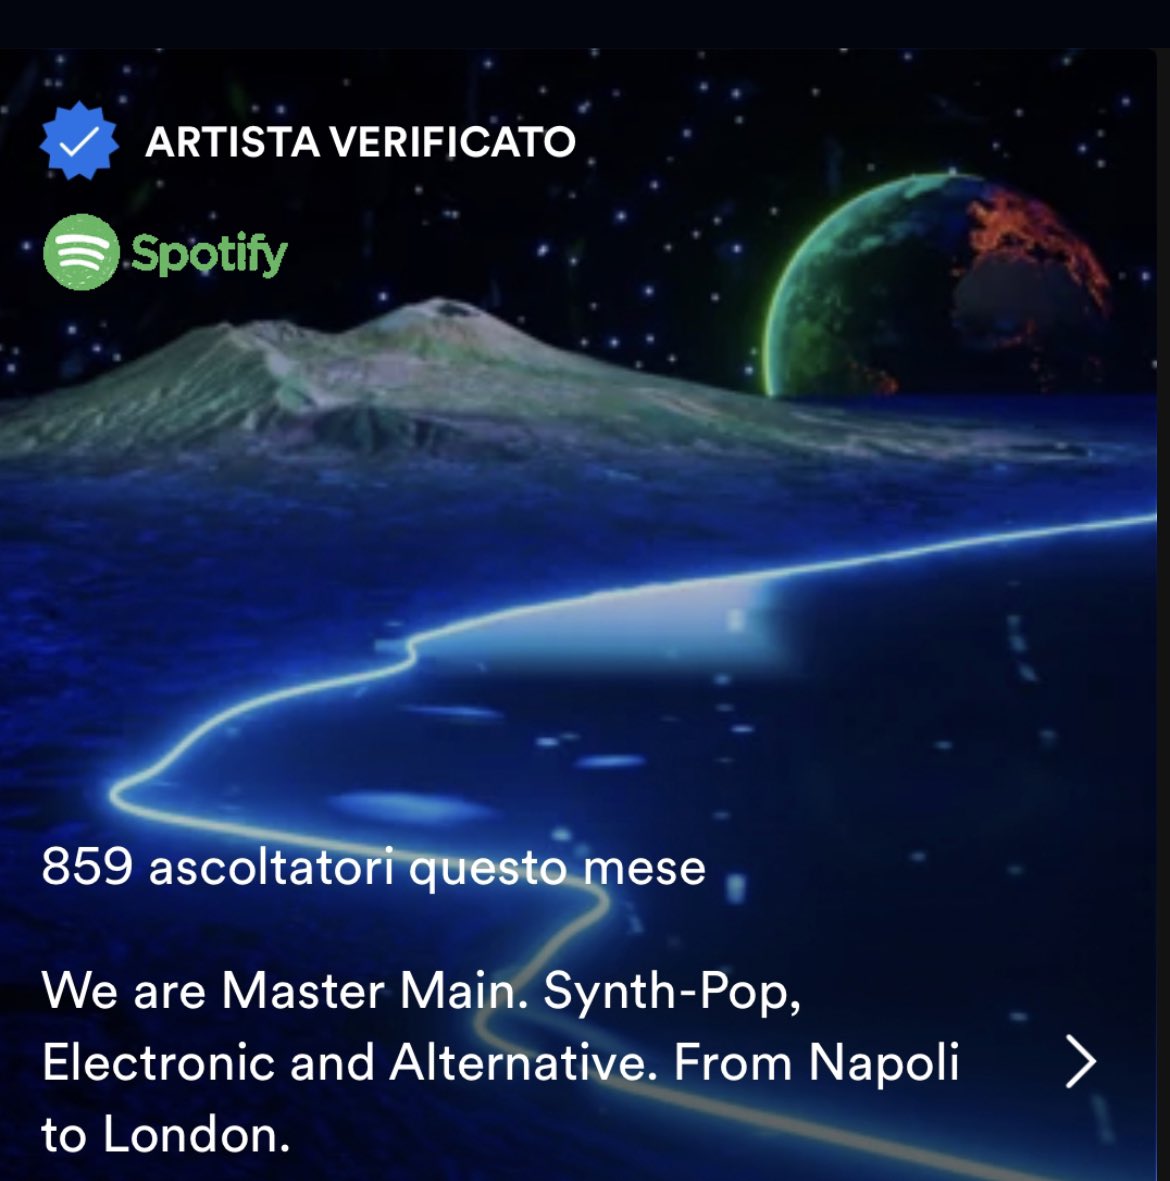 From Napoli to London through the World 🌎 
.
Follow us on Spotify… more news coming soon!
.
🔗: open.spotify.com/artist/1nbHe9j…
.
#MasterMain #MasterMainMusic #Napoli #Vesuvio #CittàdiNapoli #napolidavivere #music #electronicmusic #synthpop #discomusic #spacebayofnaples #Stars #Spotify